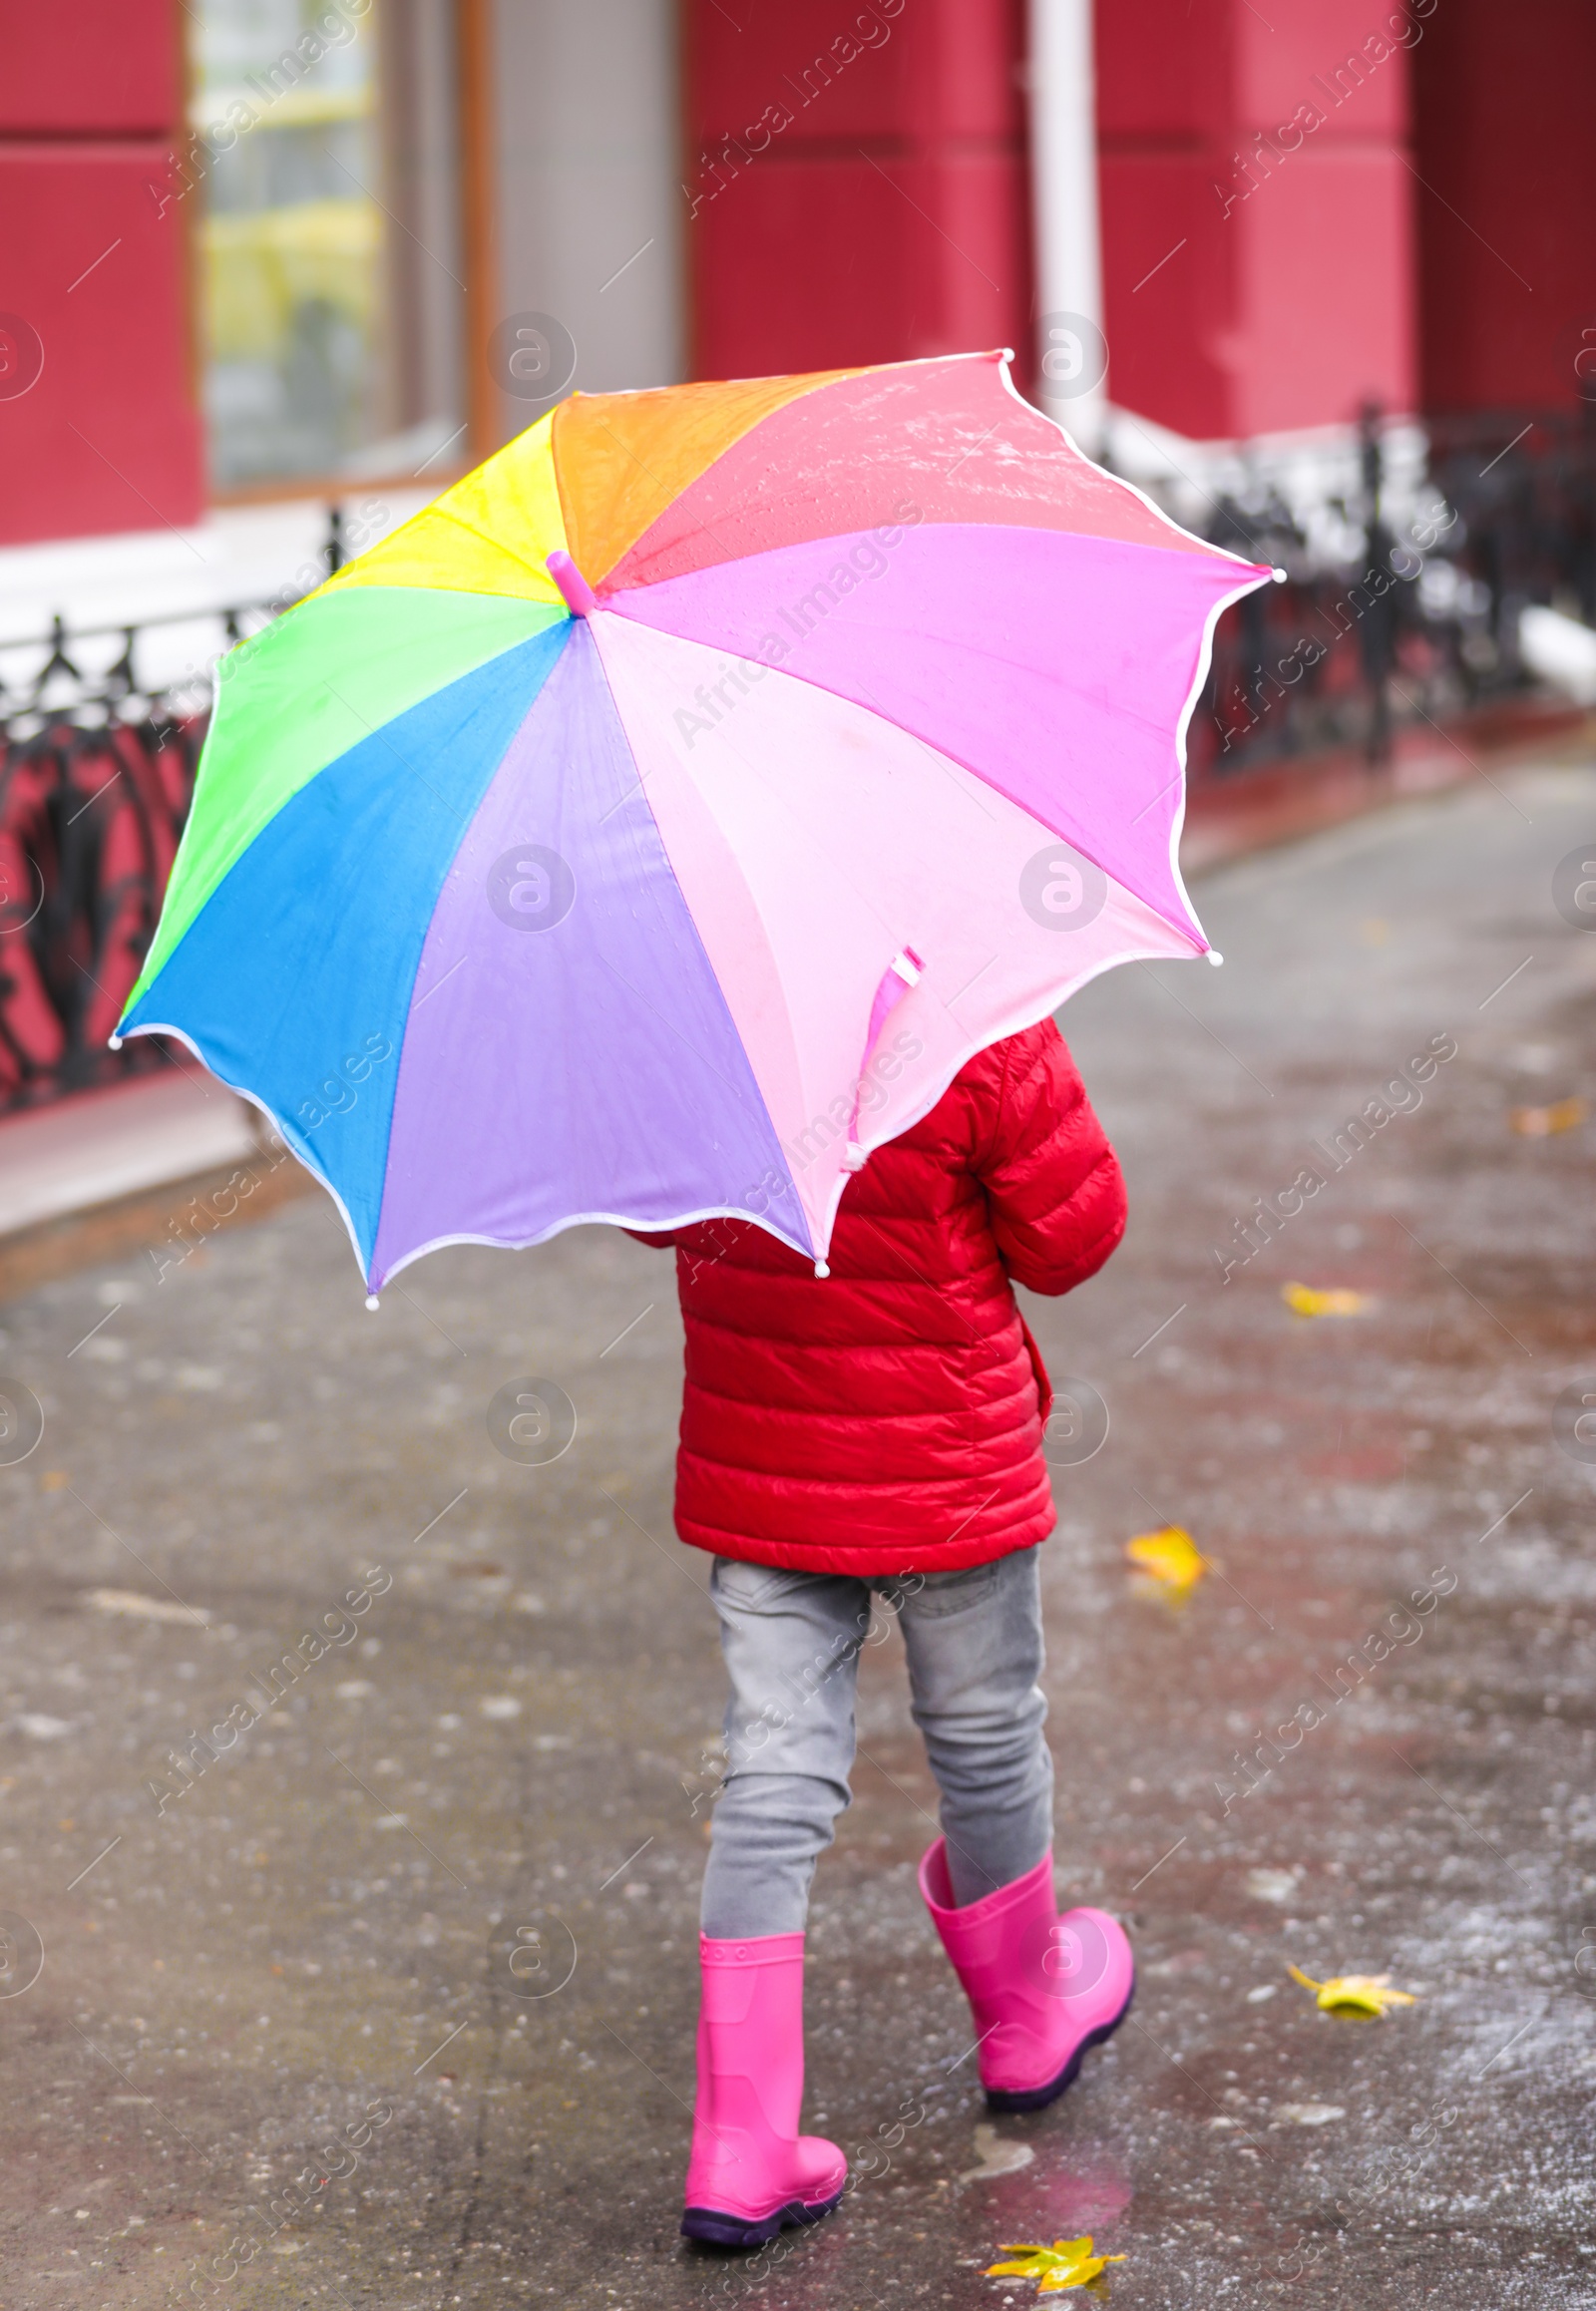 Photo of Little girl with umbrella taking autumn walk in city on rainy day